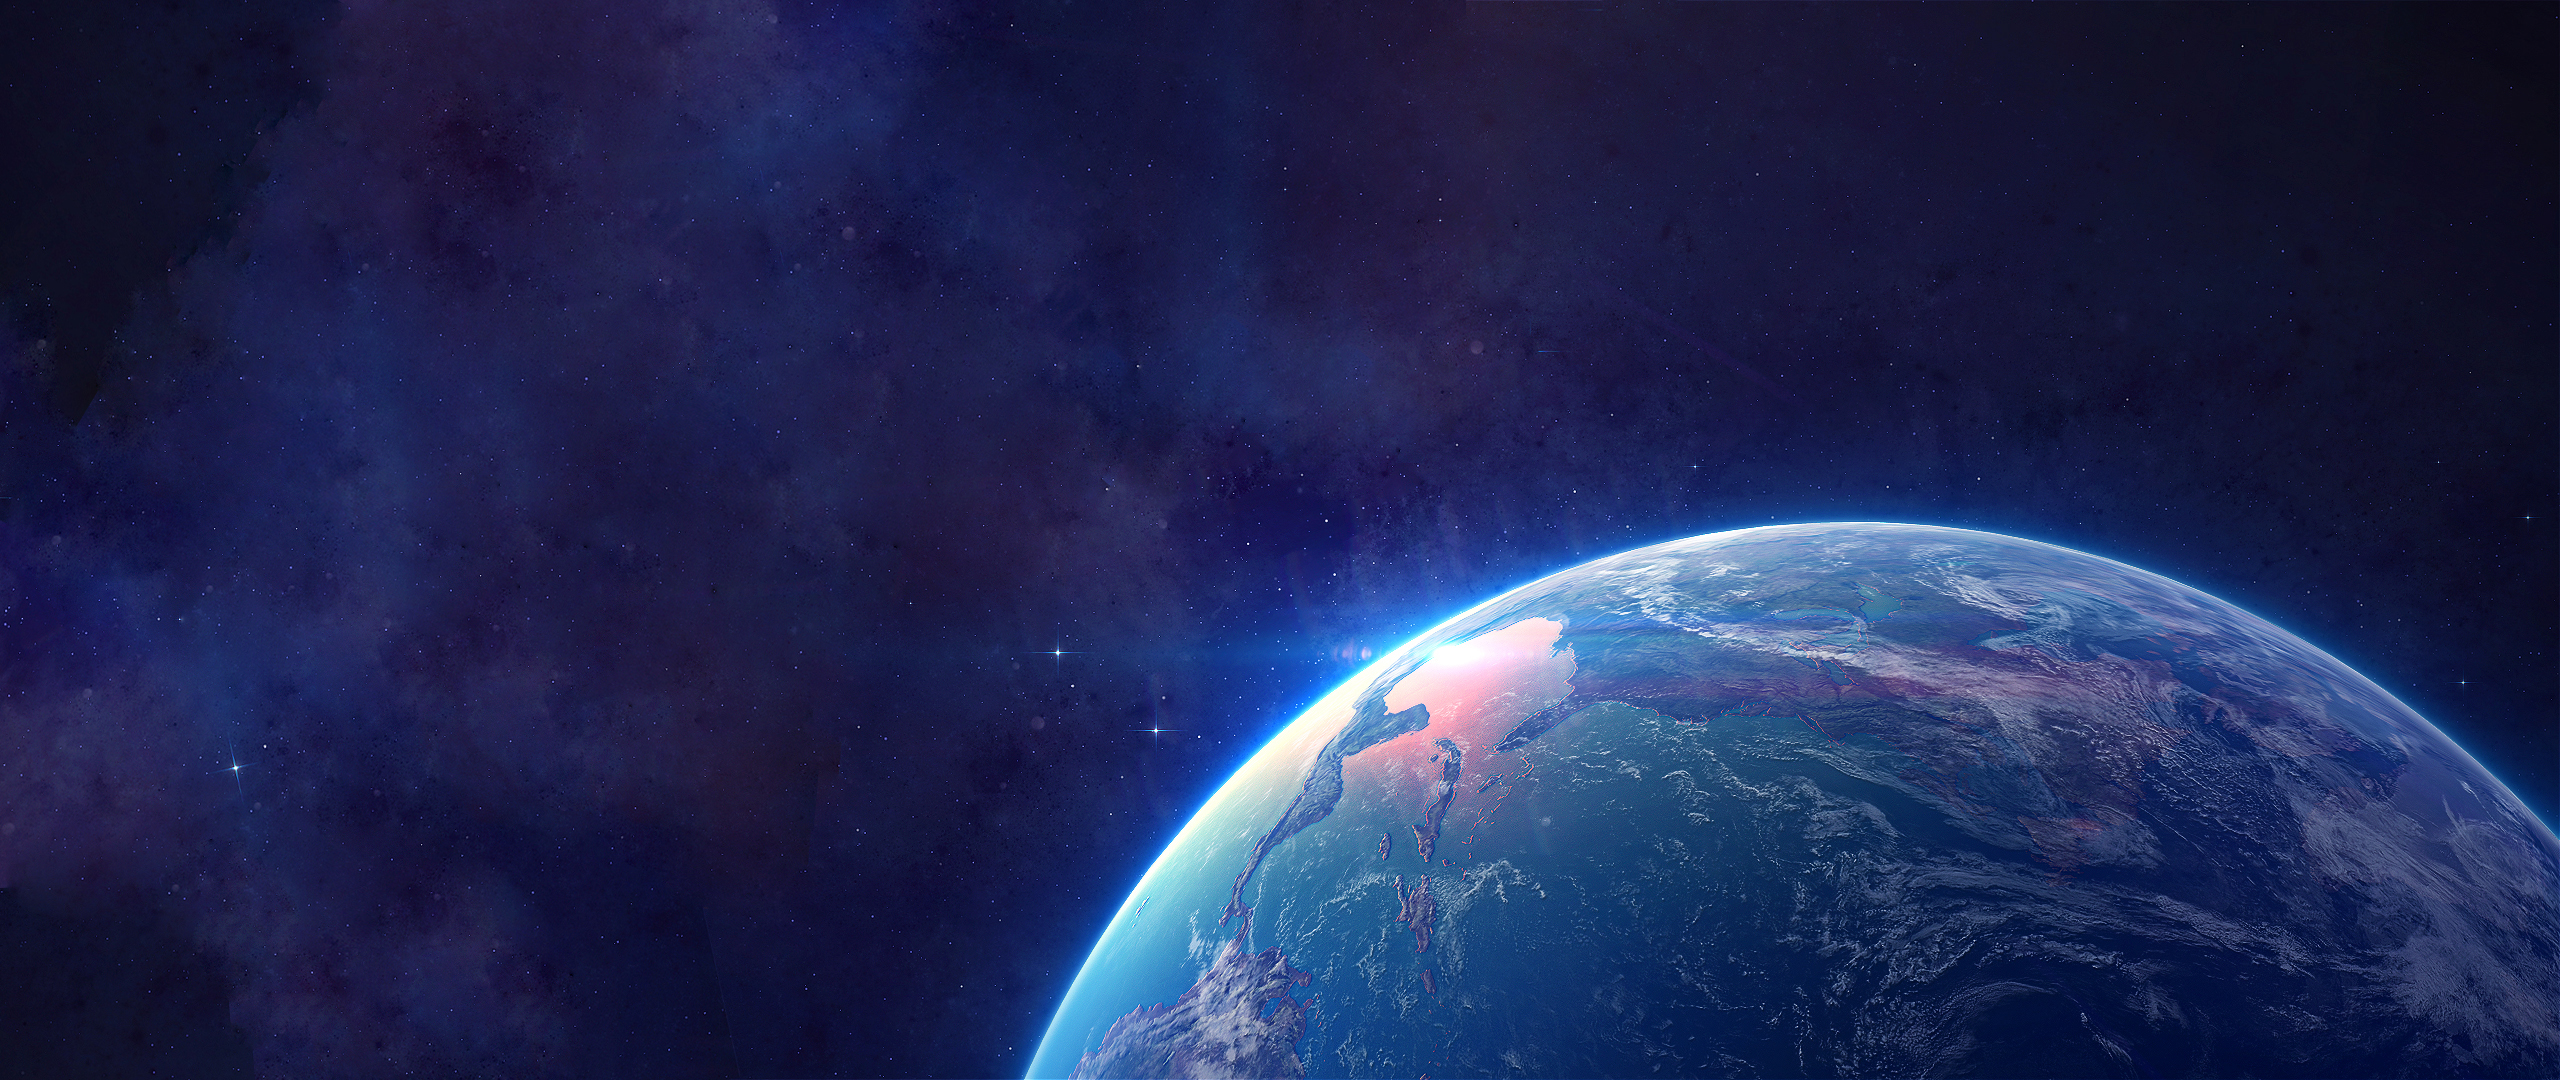 Space Stars Atmosphere Earth Ultrawide World 2560x1080